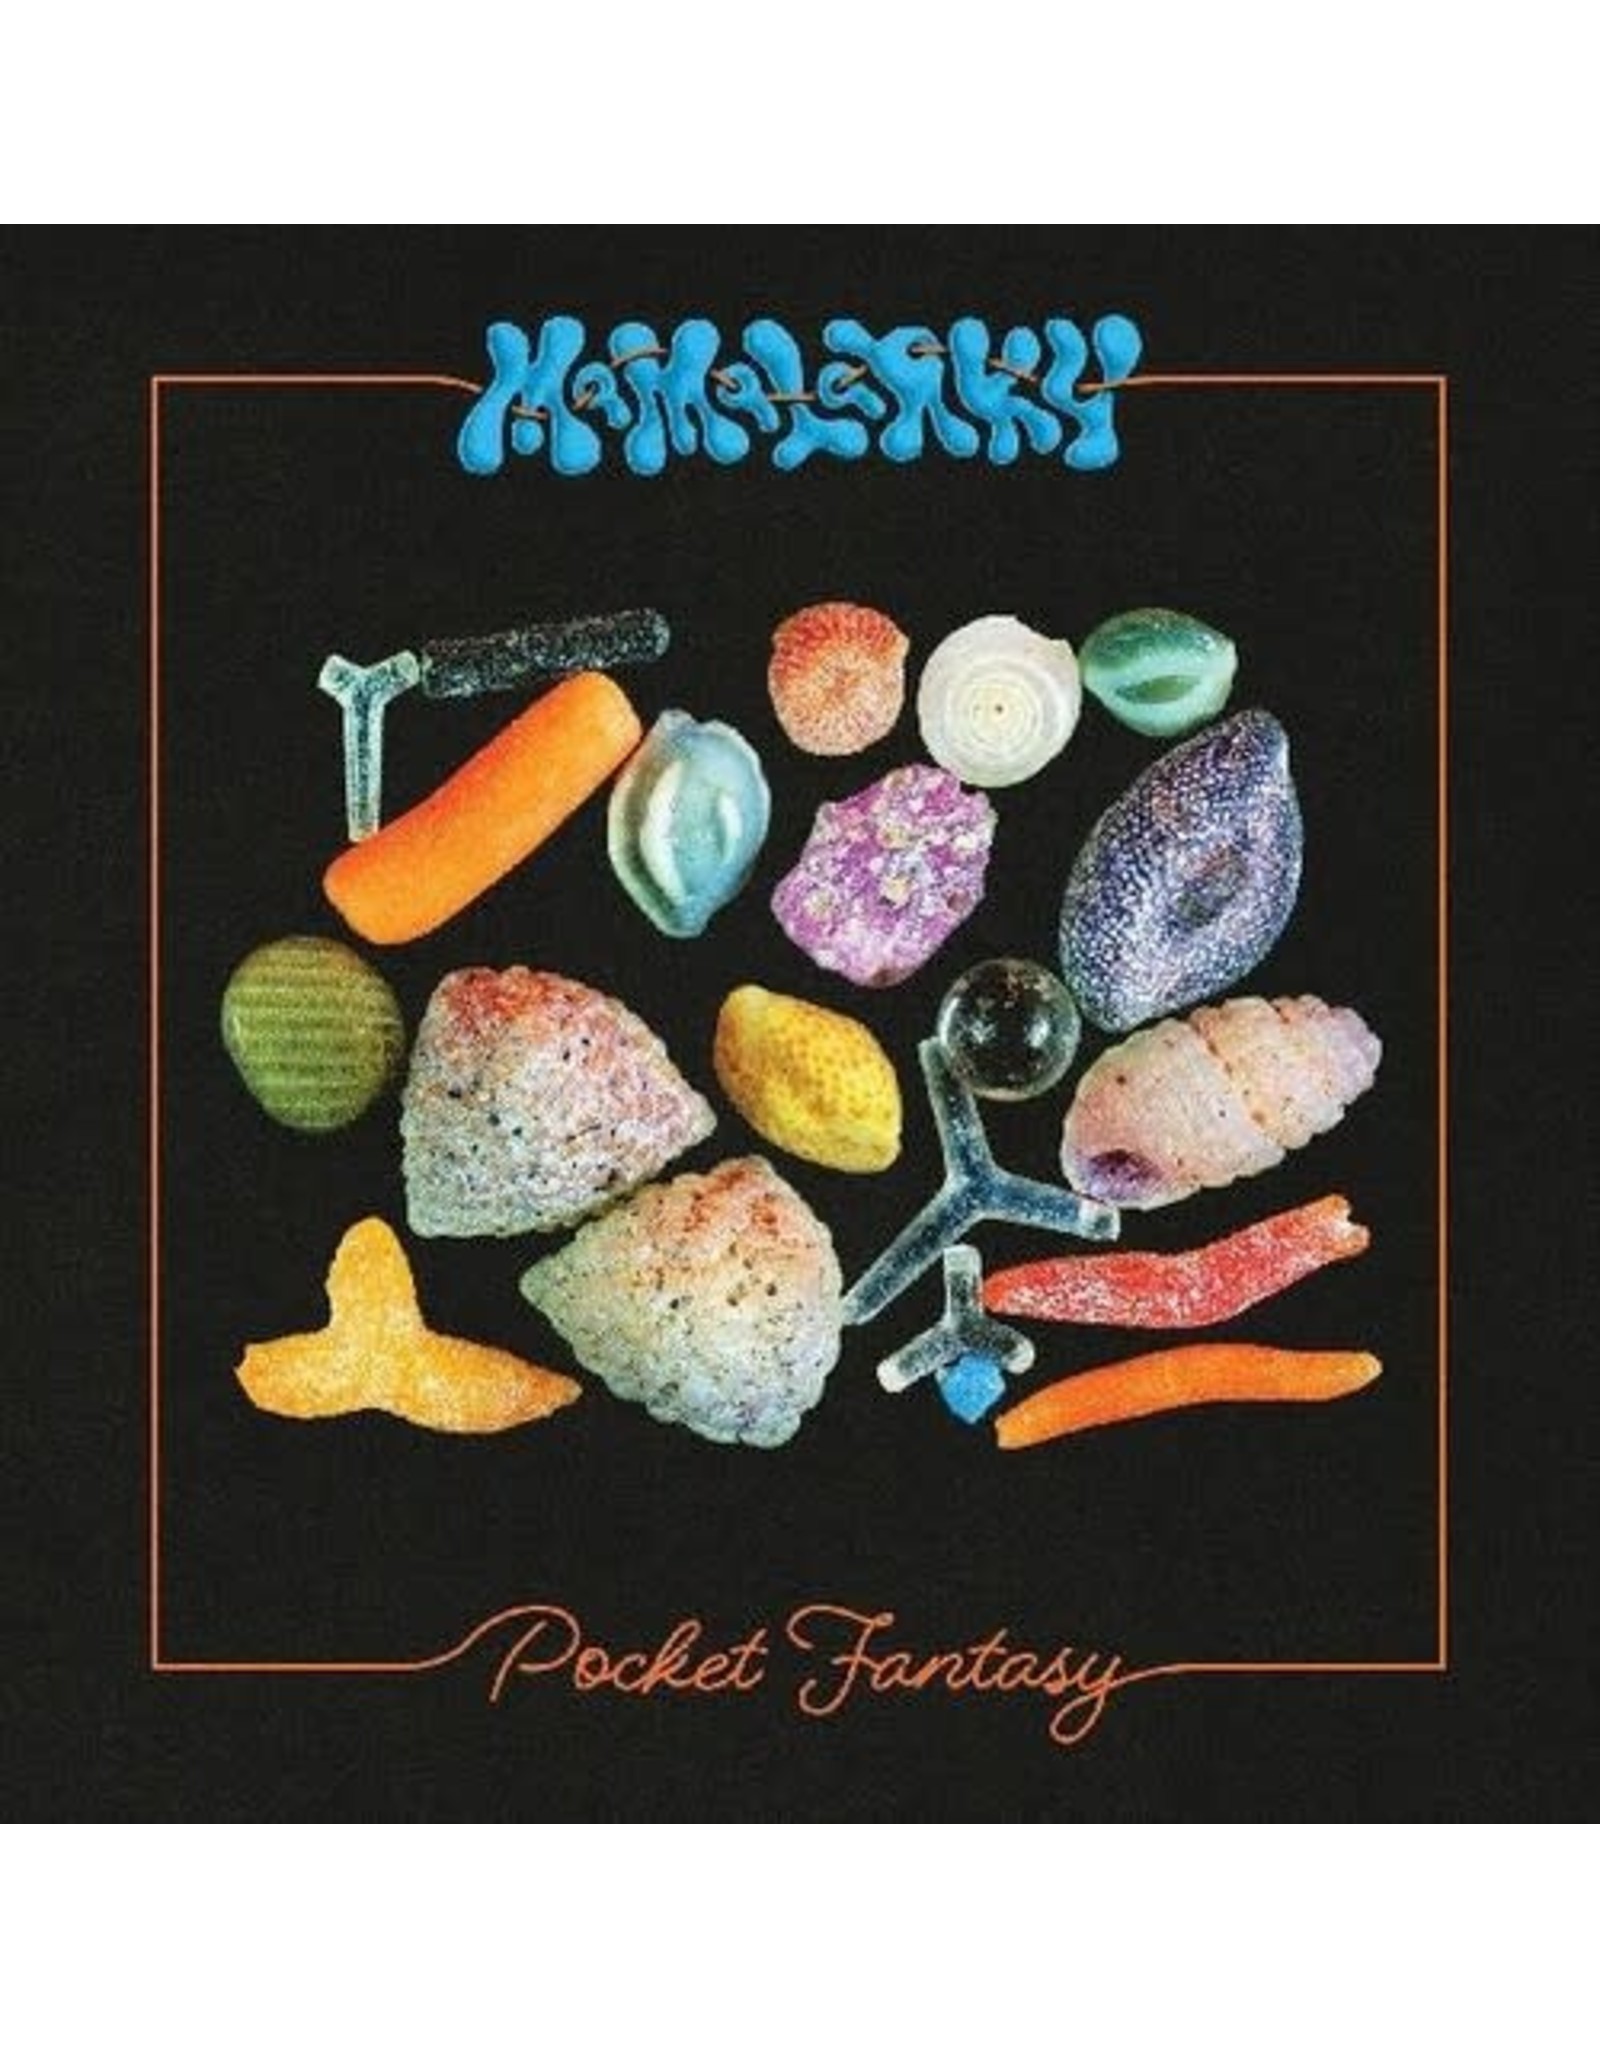 Mamalarky / Pocket Fantasy (Blue Vinyl)